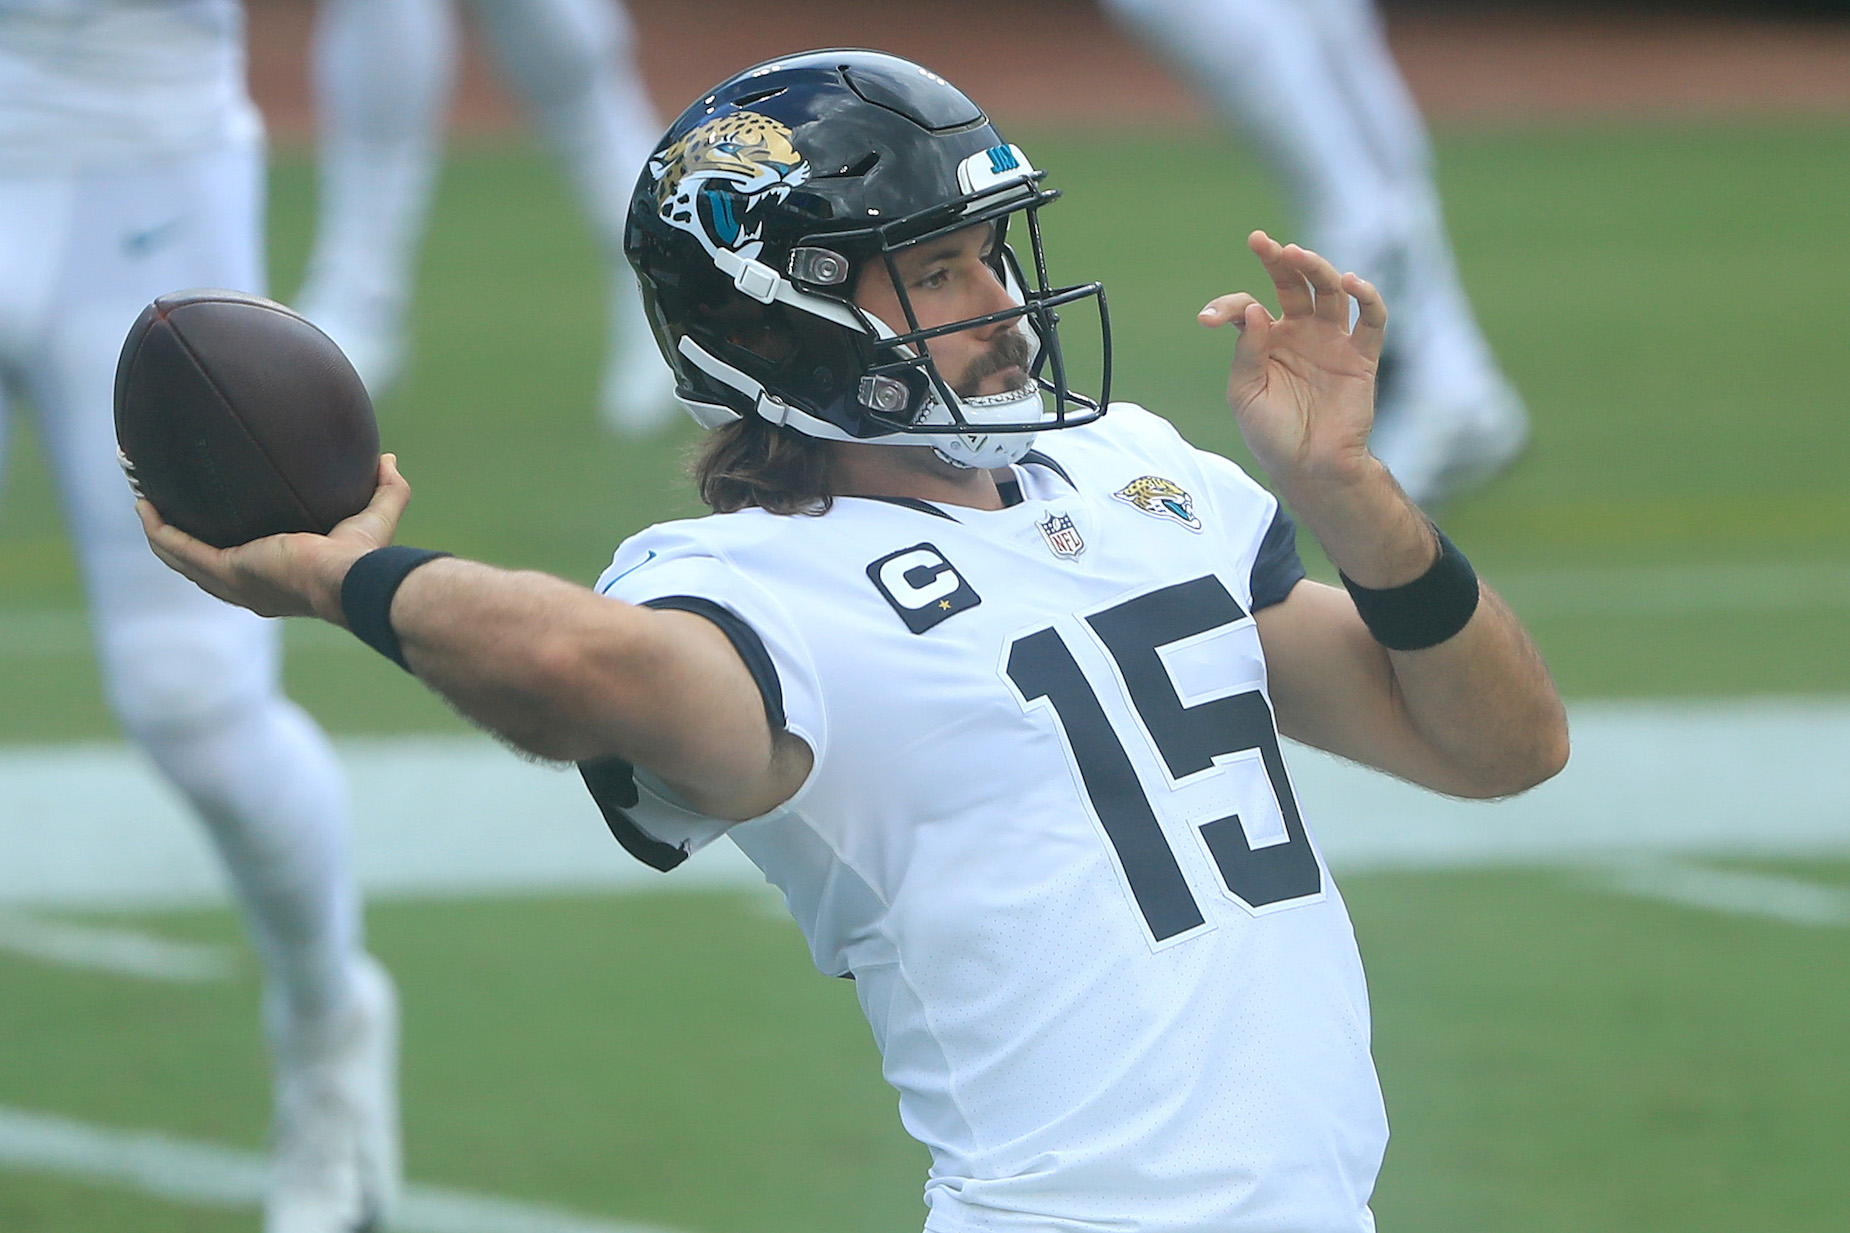 After bursting onto the NFL scene last year, Gardner Minshew is feeling good about the Jacksonville Jaguars.